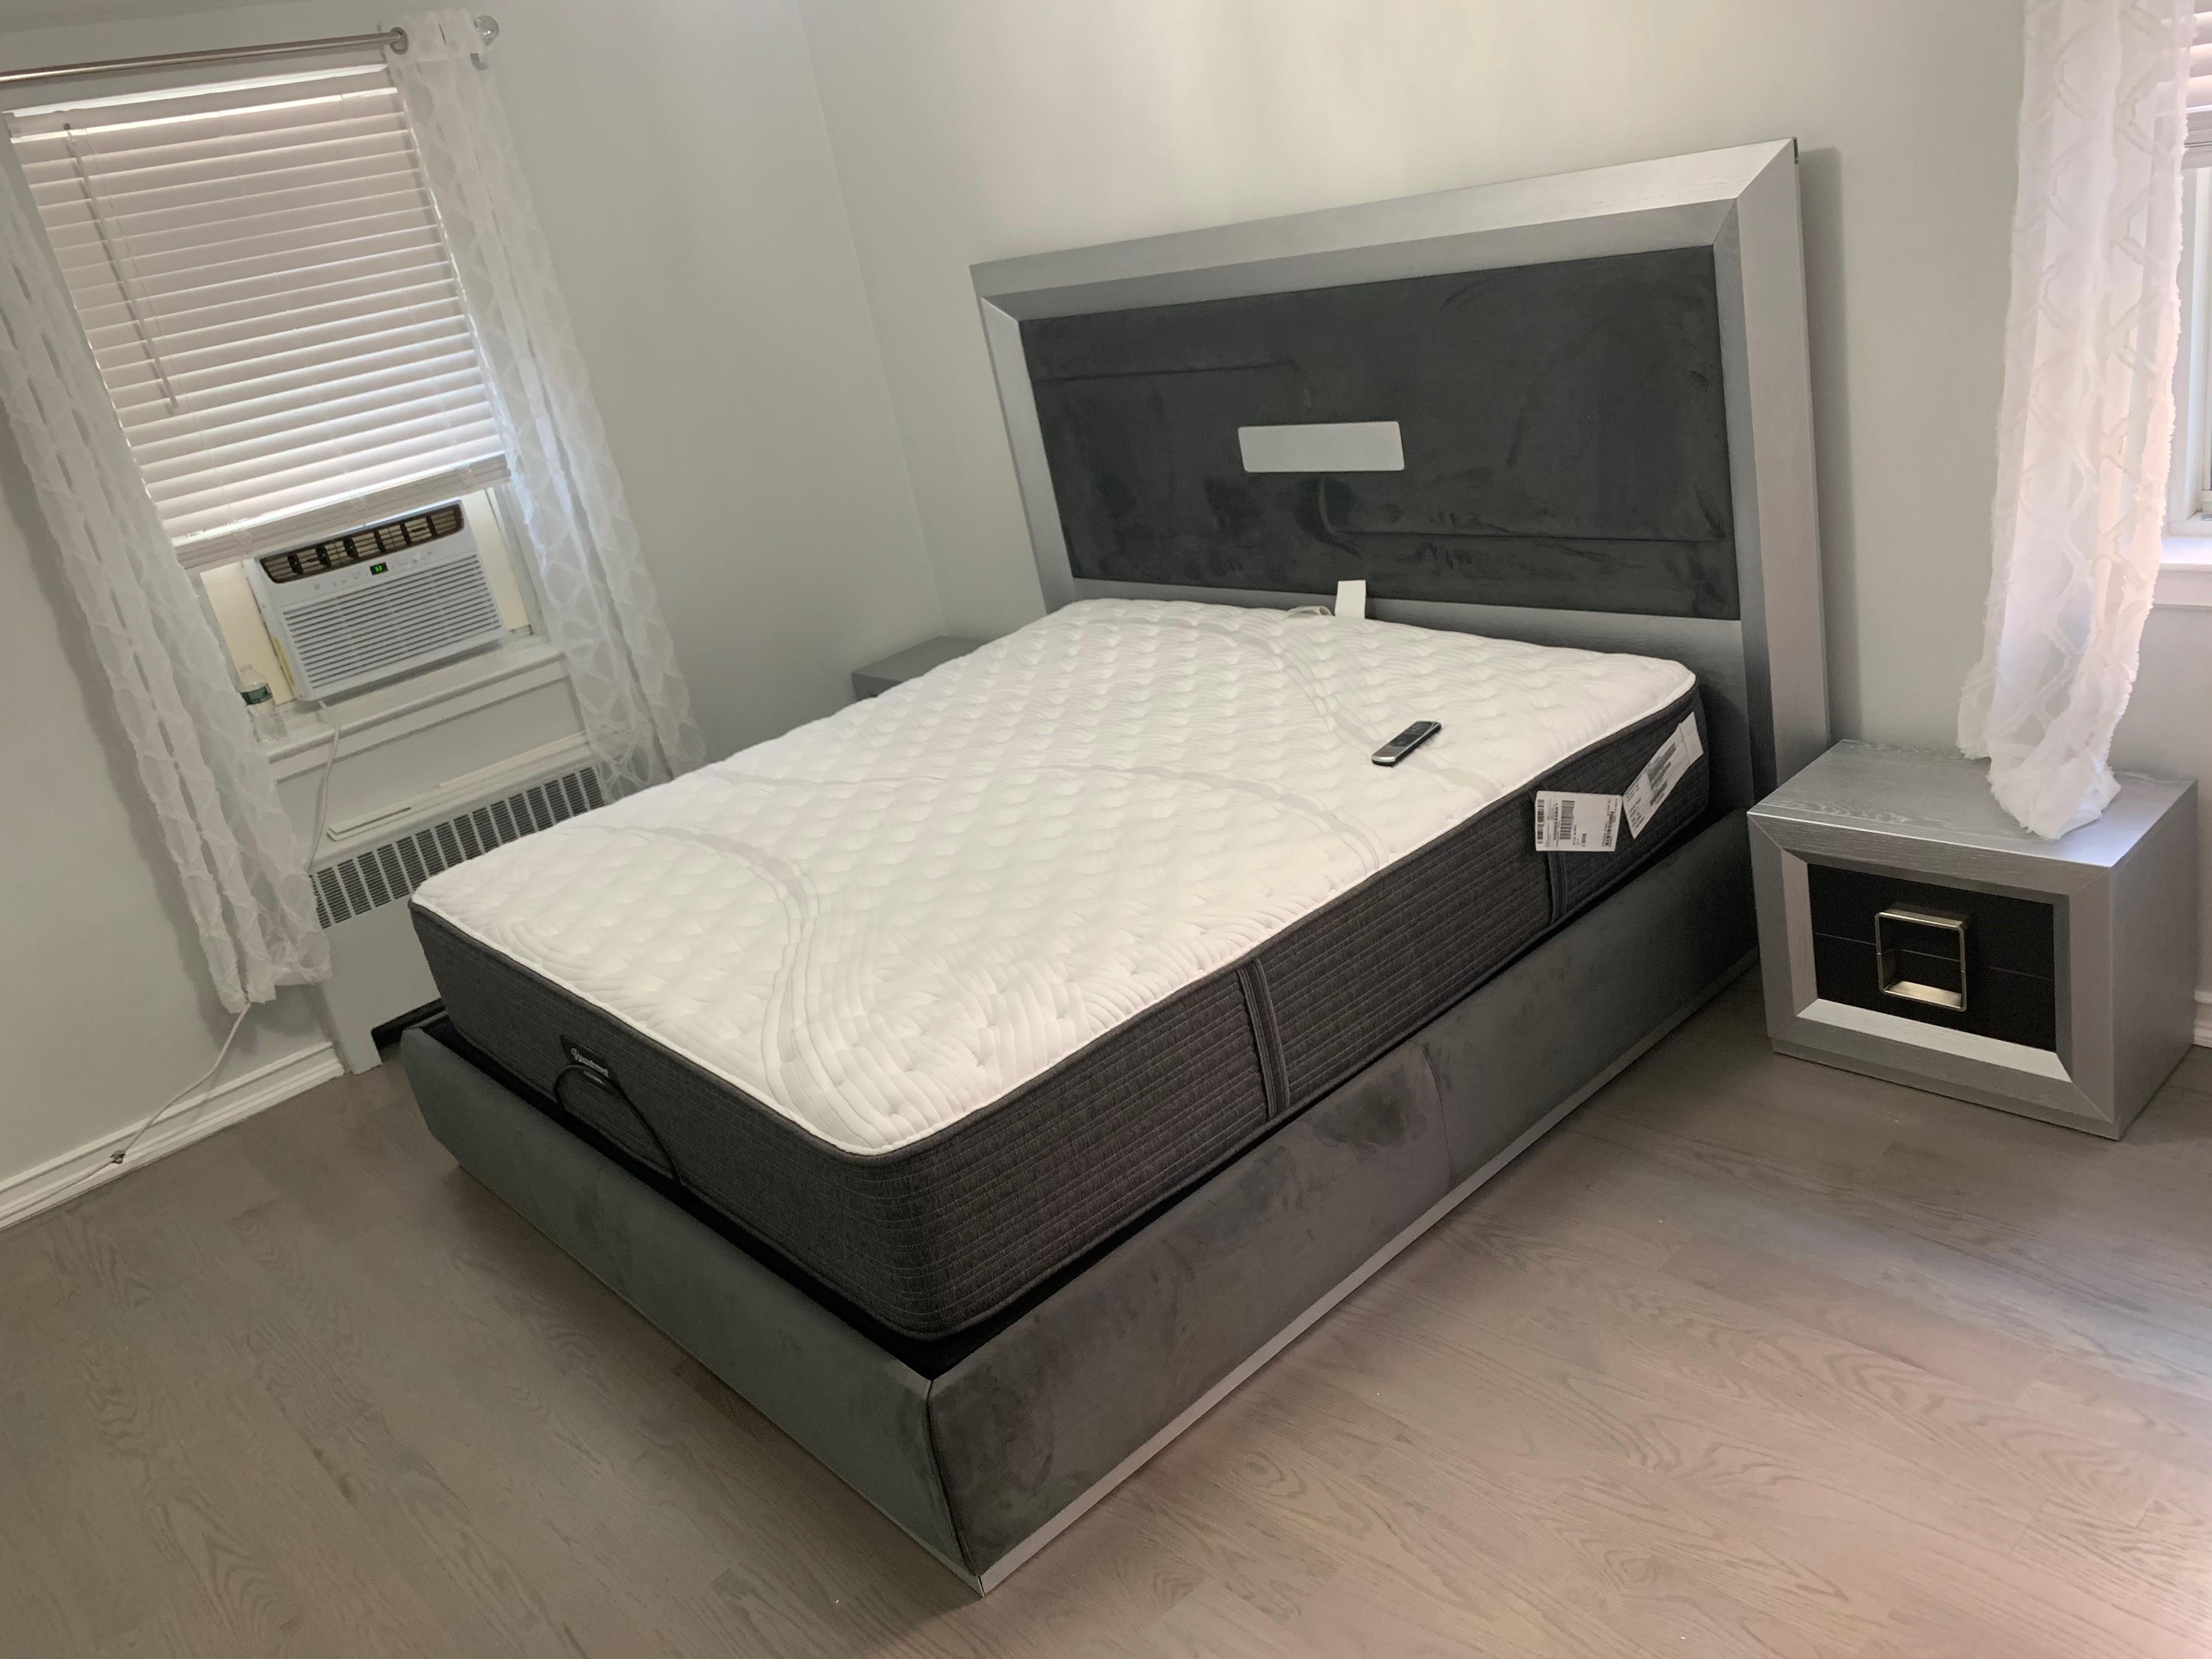 

    
ENZOBEDKS-2NDMC-6PC Grey Microfiber King Bedroom Set 6P Enzo ESF Modern Contemporary Franco Spain
